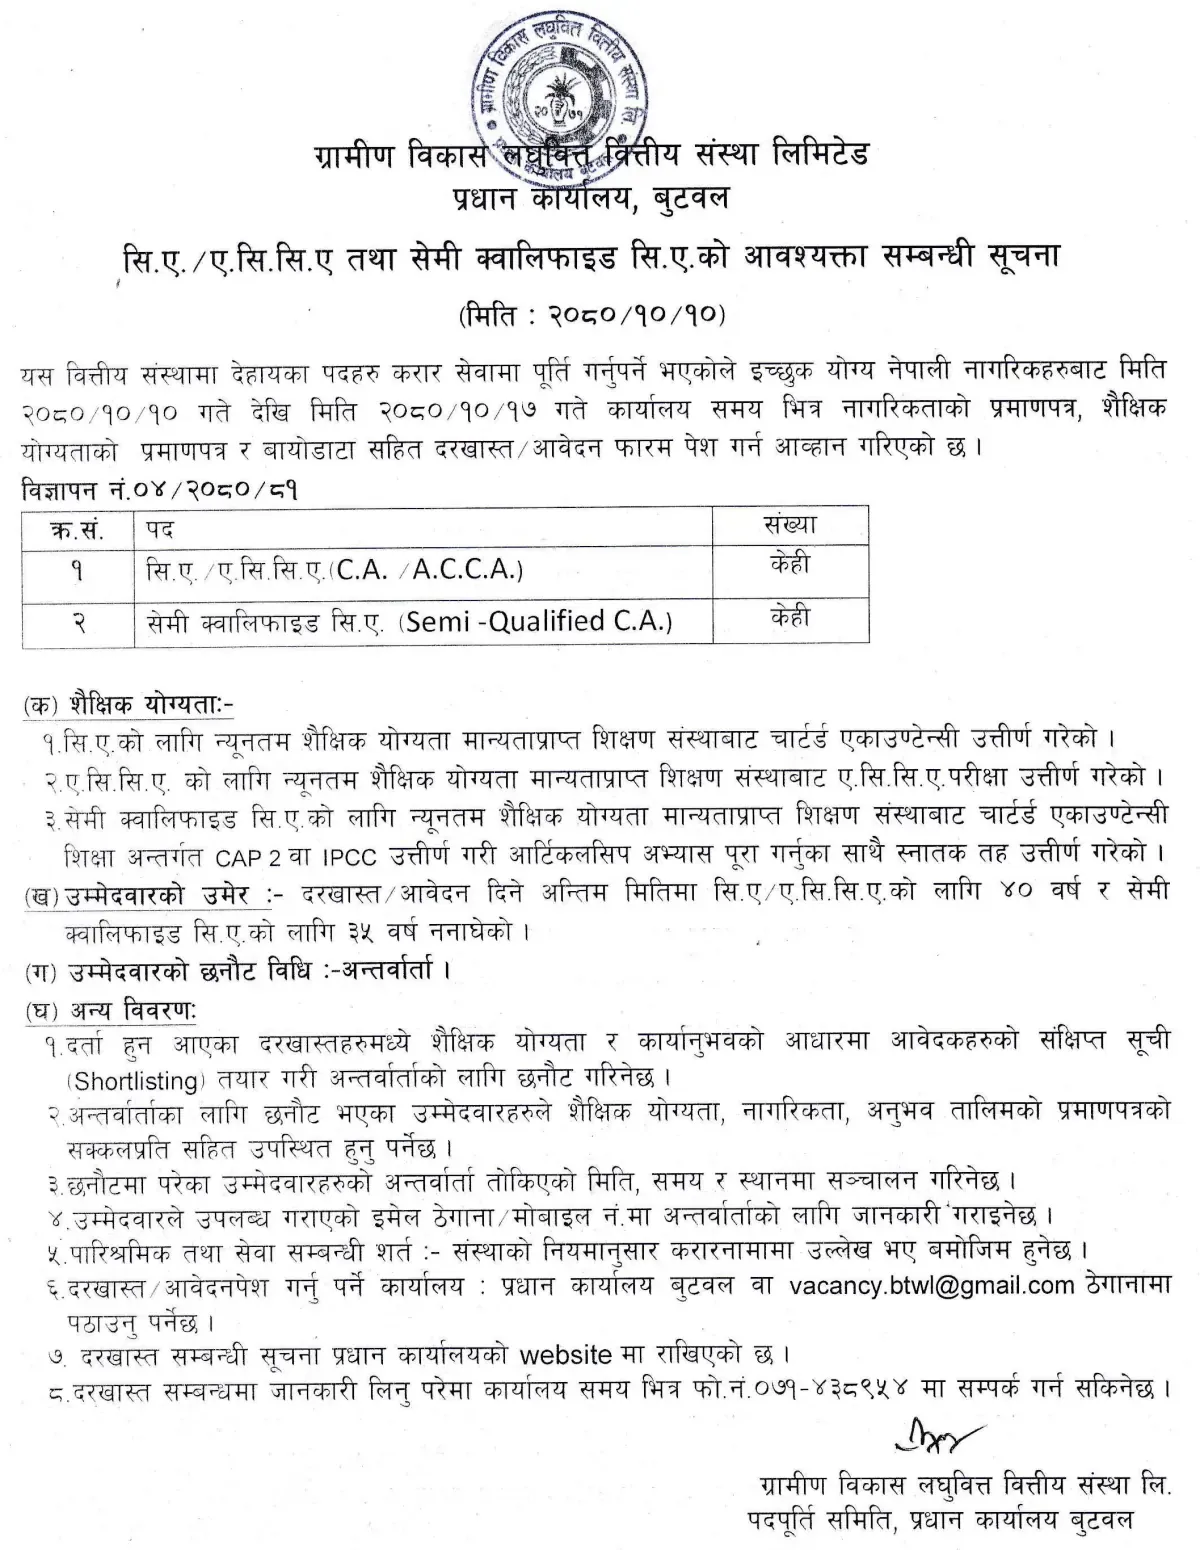 Grameen Bikas Laghubitta Bittiya Sanstha Ltd Vacancy